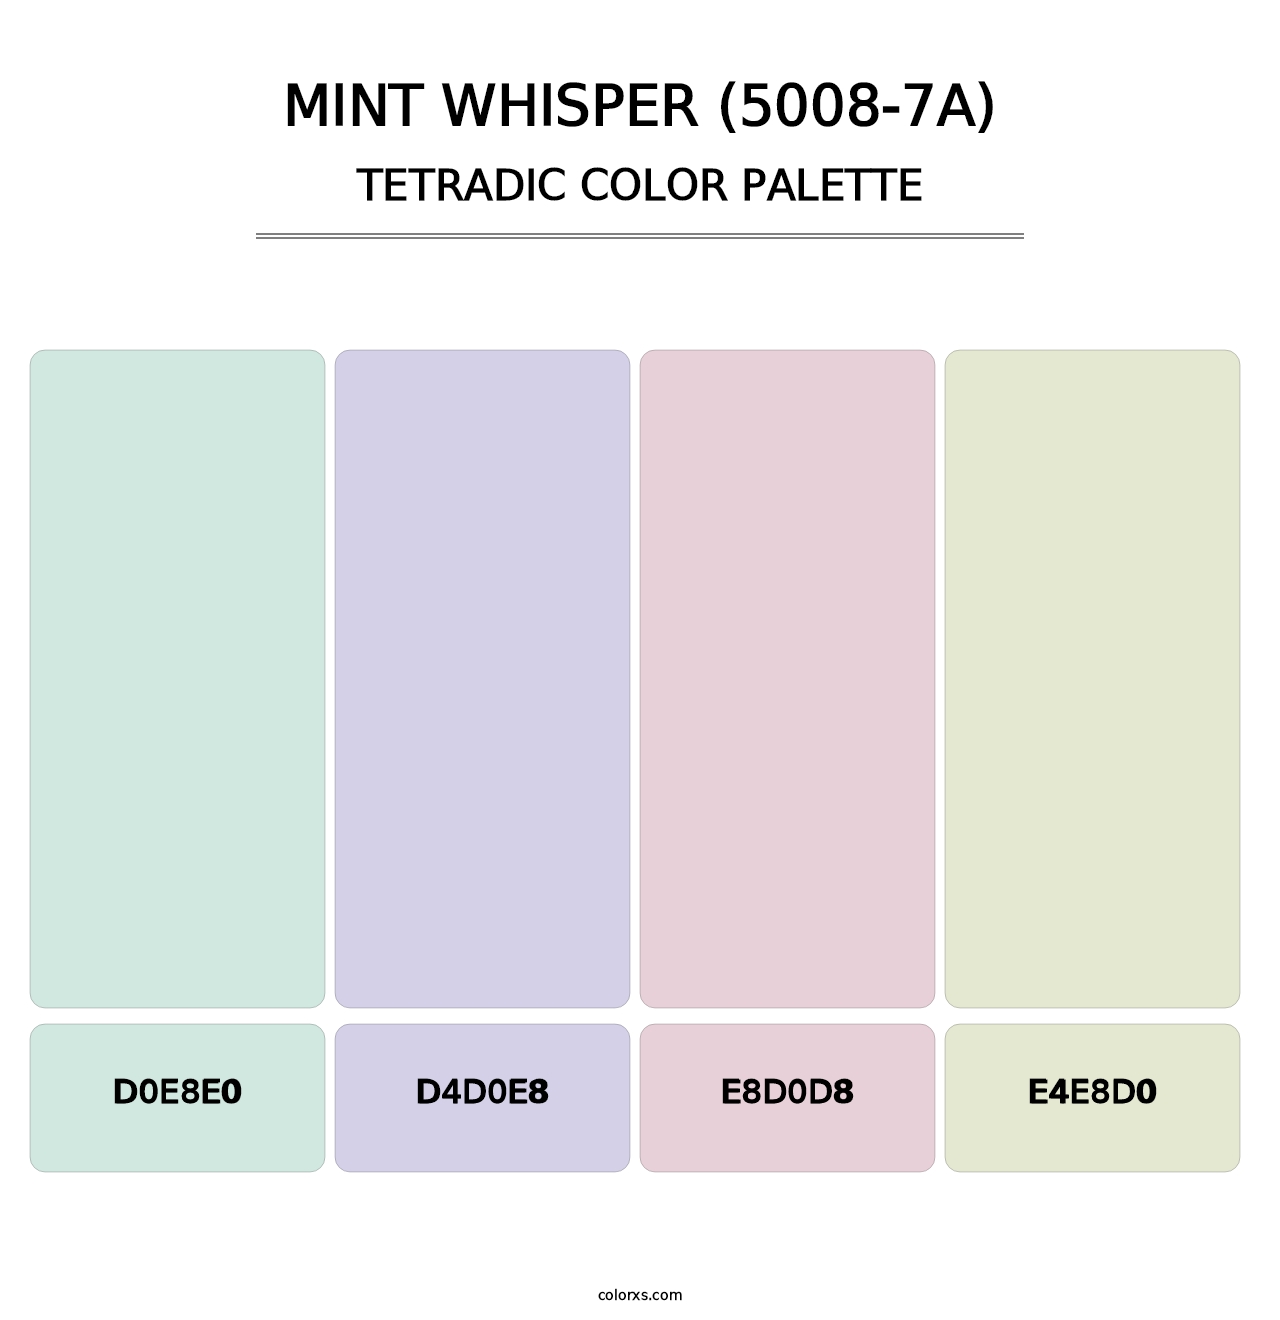 Mint Whisper (5008-7A) - Tetradic Color Palette